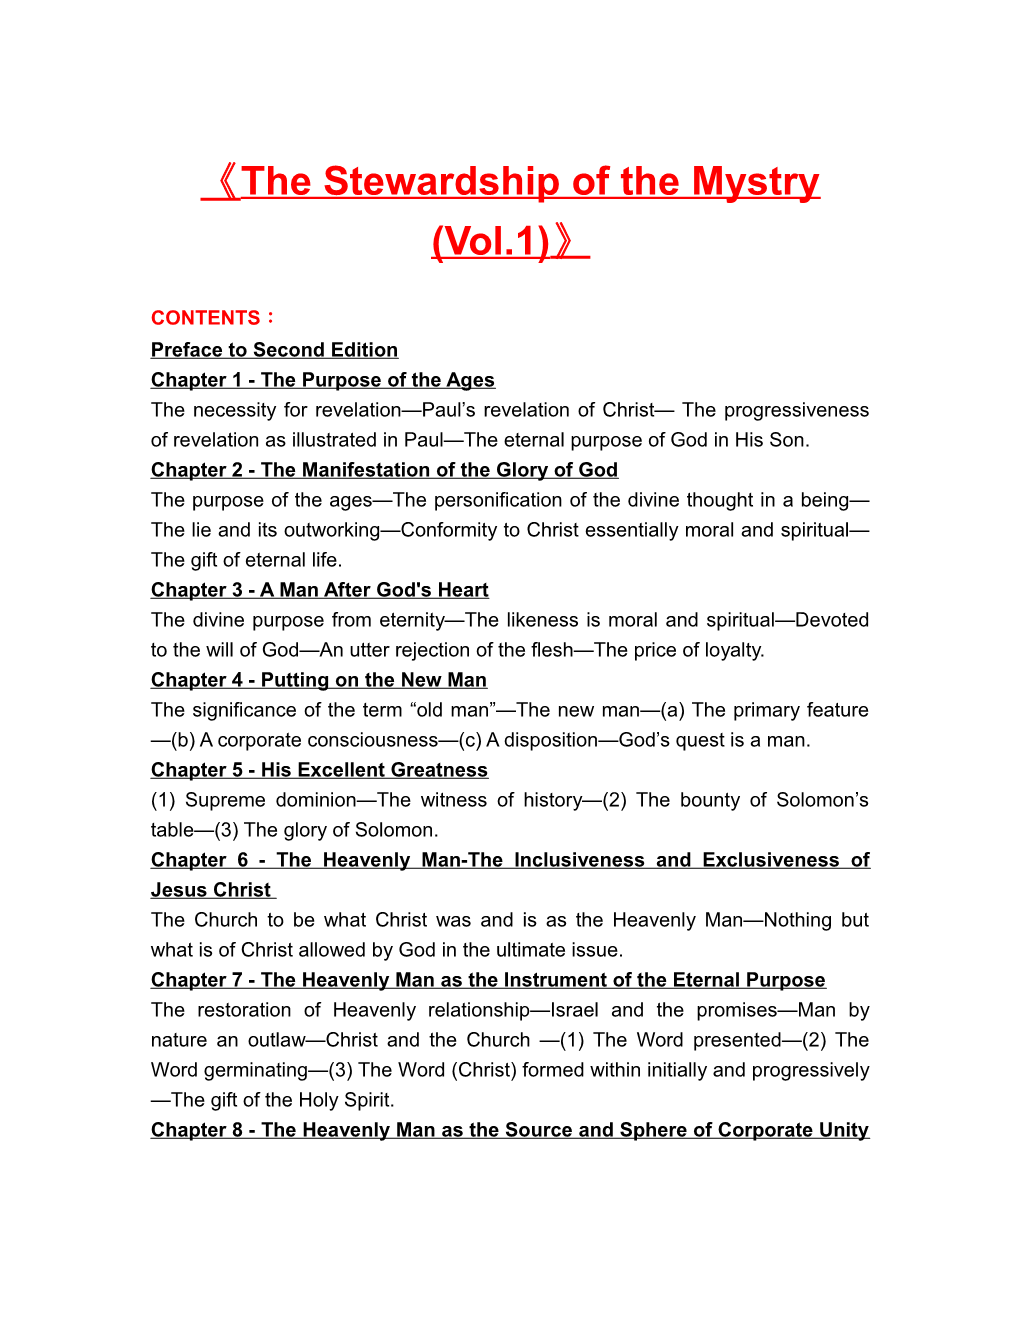 The Stewardship of the Mystry(Vol.1)